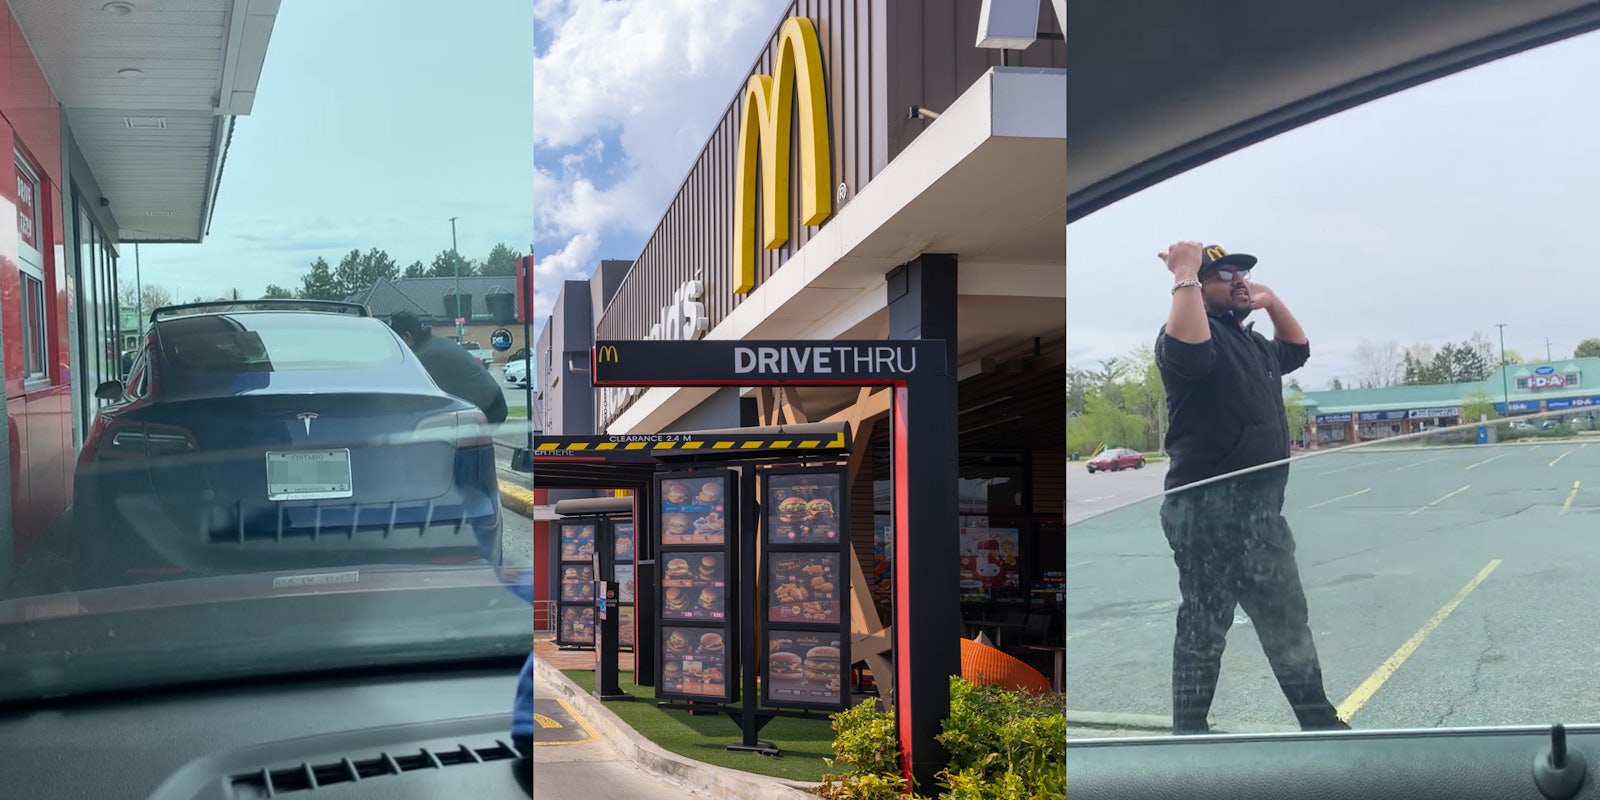 dead Tesla in McDonald's drive thru (l) McDonald's drive thru with sign (c) McDonald's employee speaking outside pointing left (r)